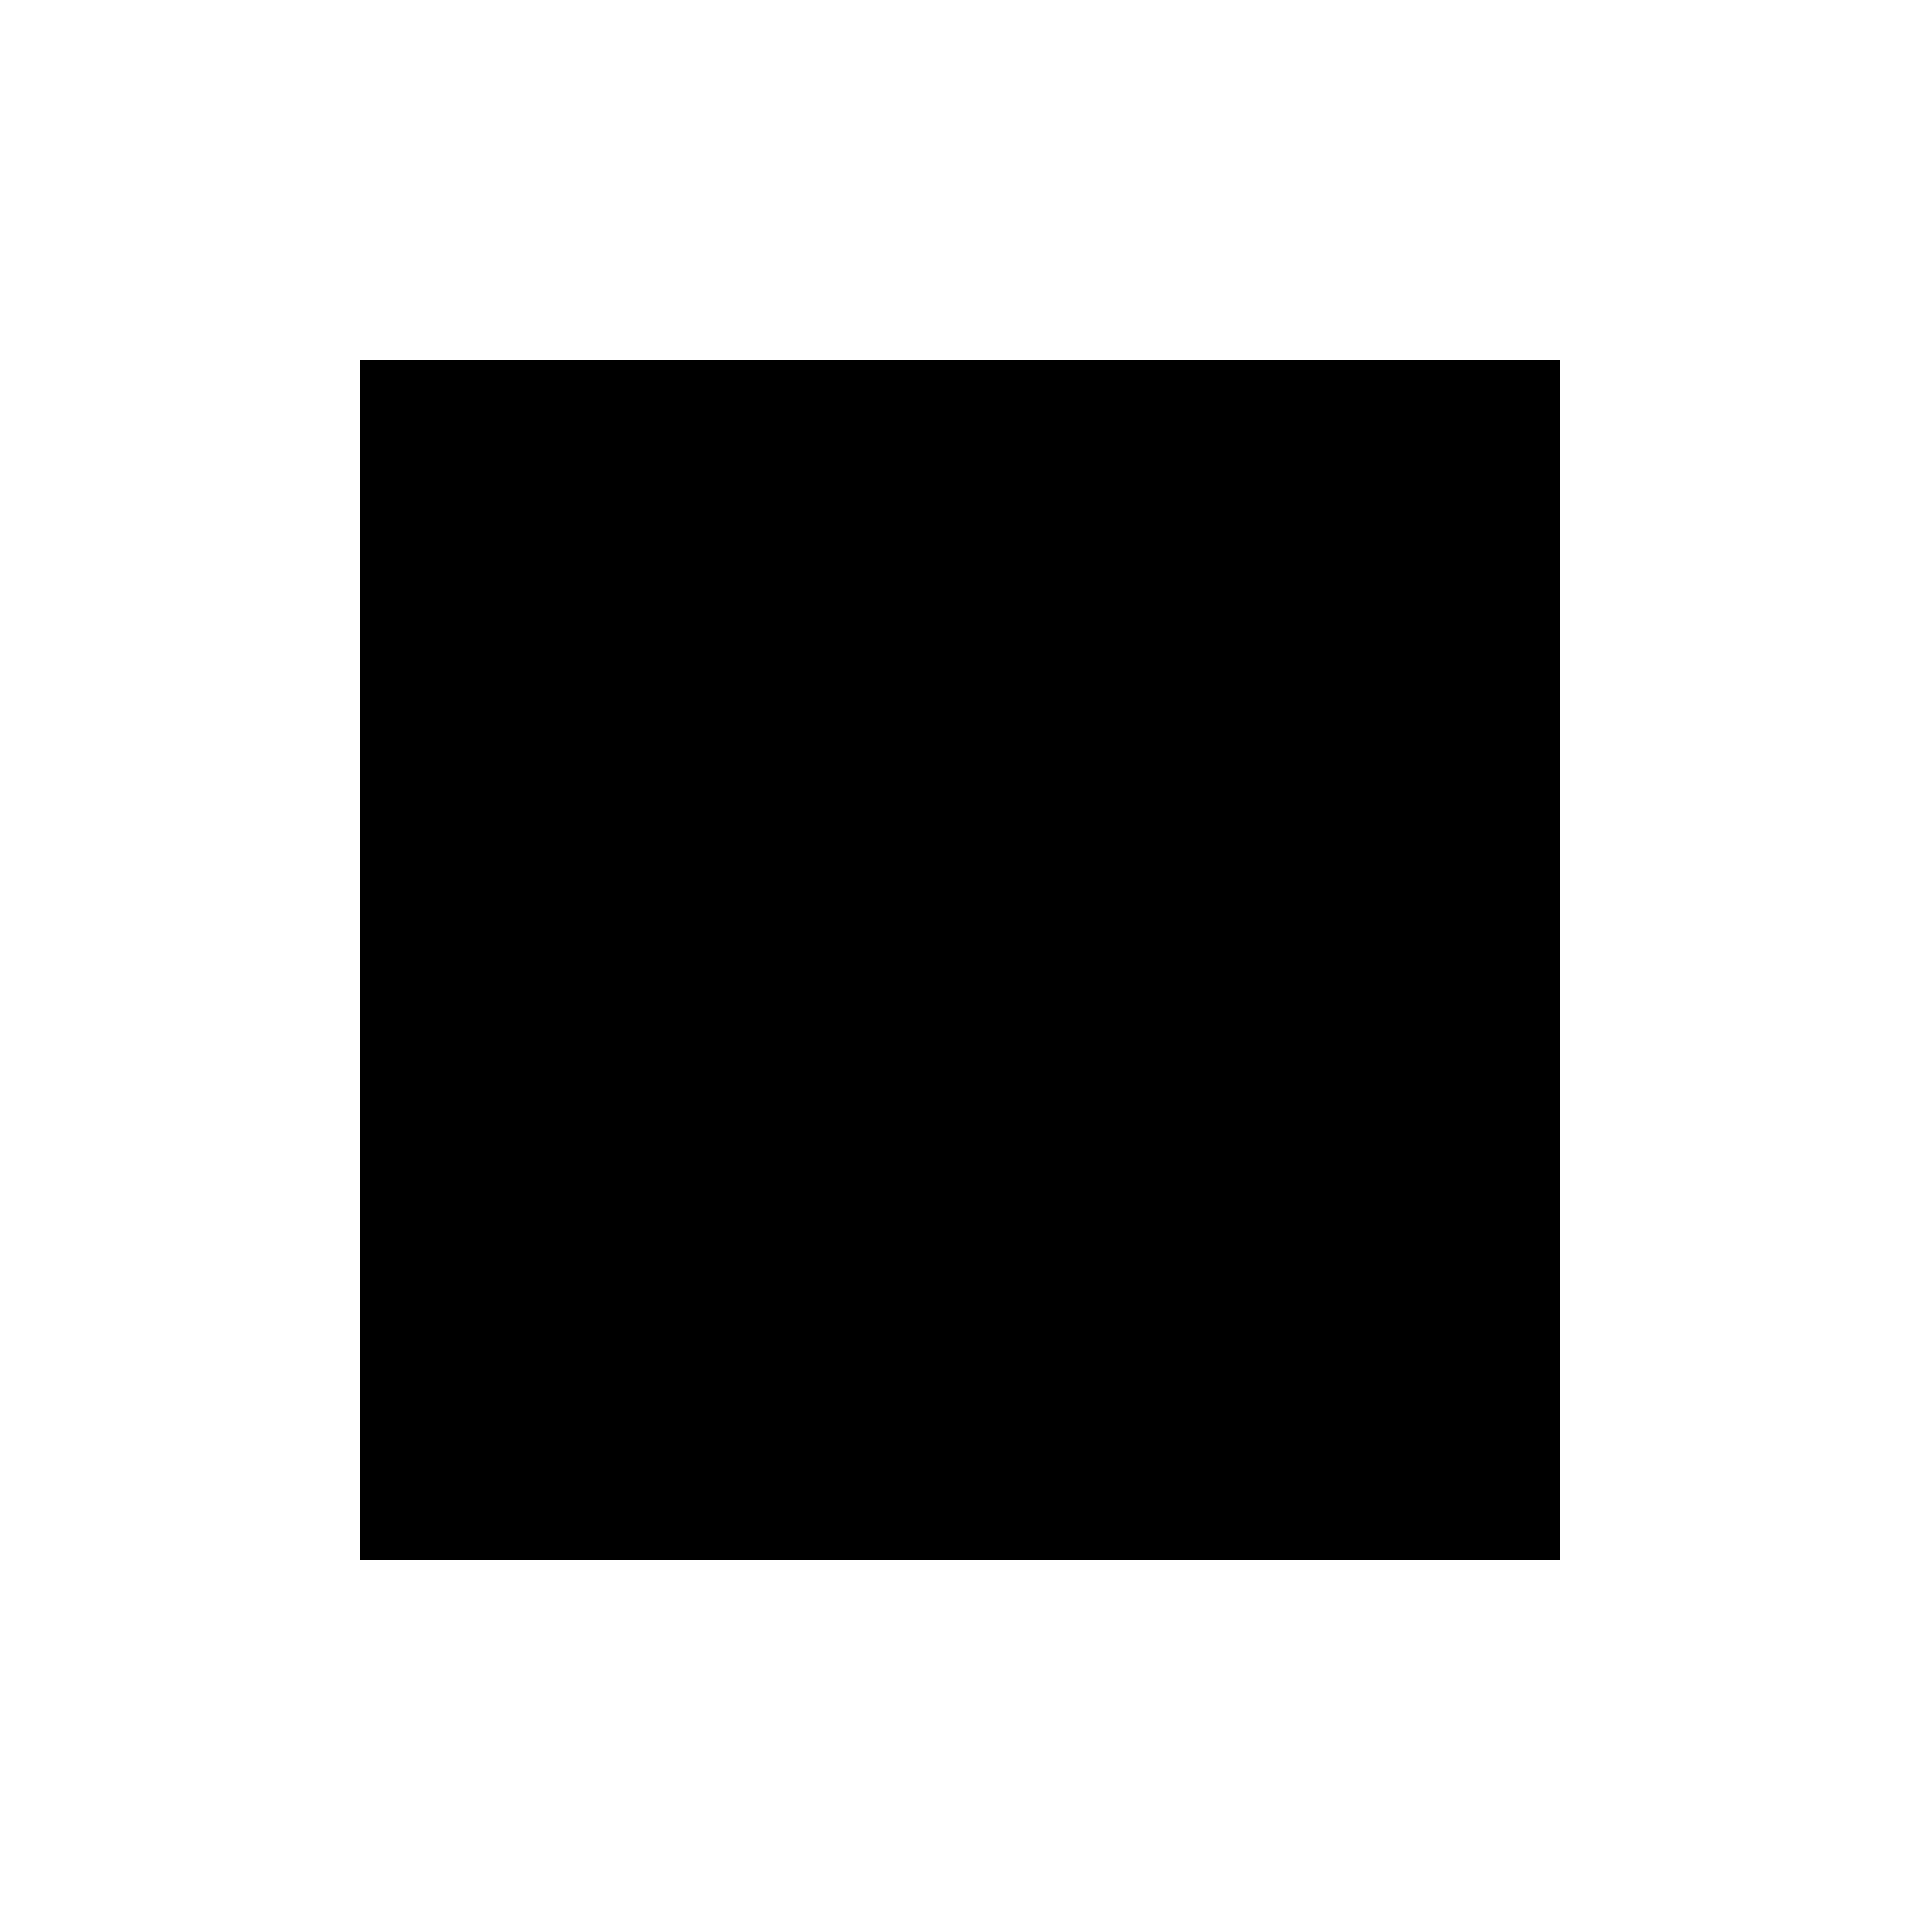 Black Square PNG Transparent Images - PNG All